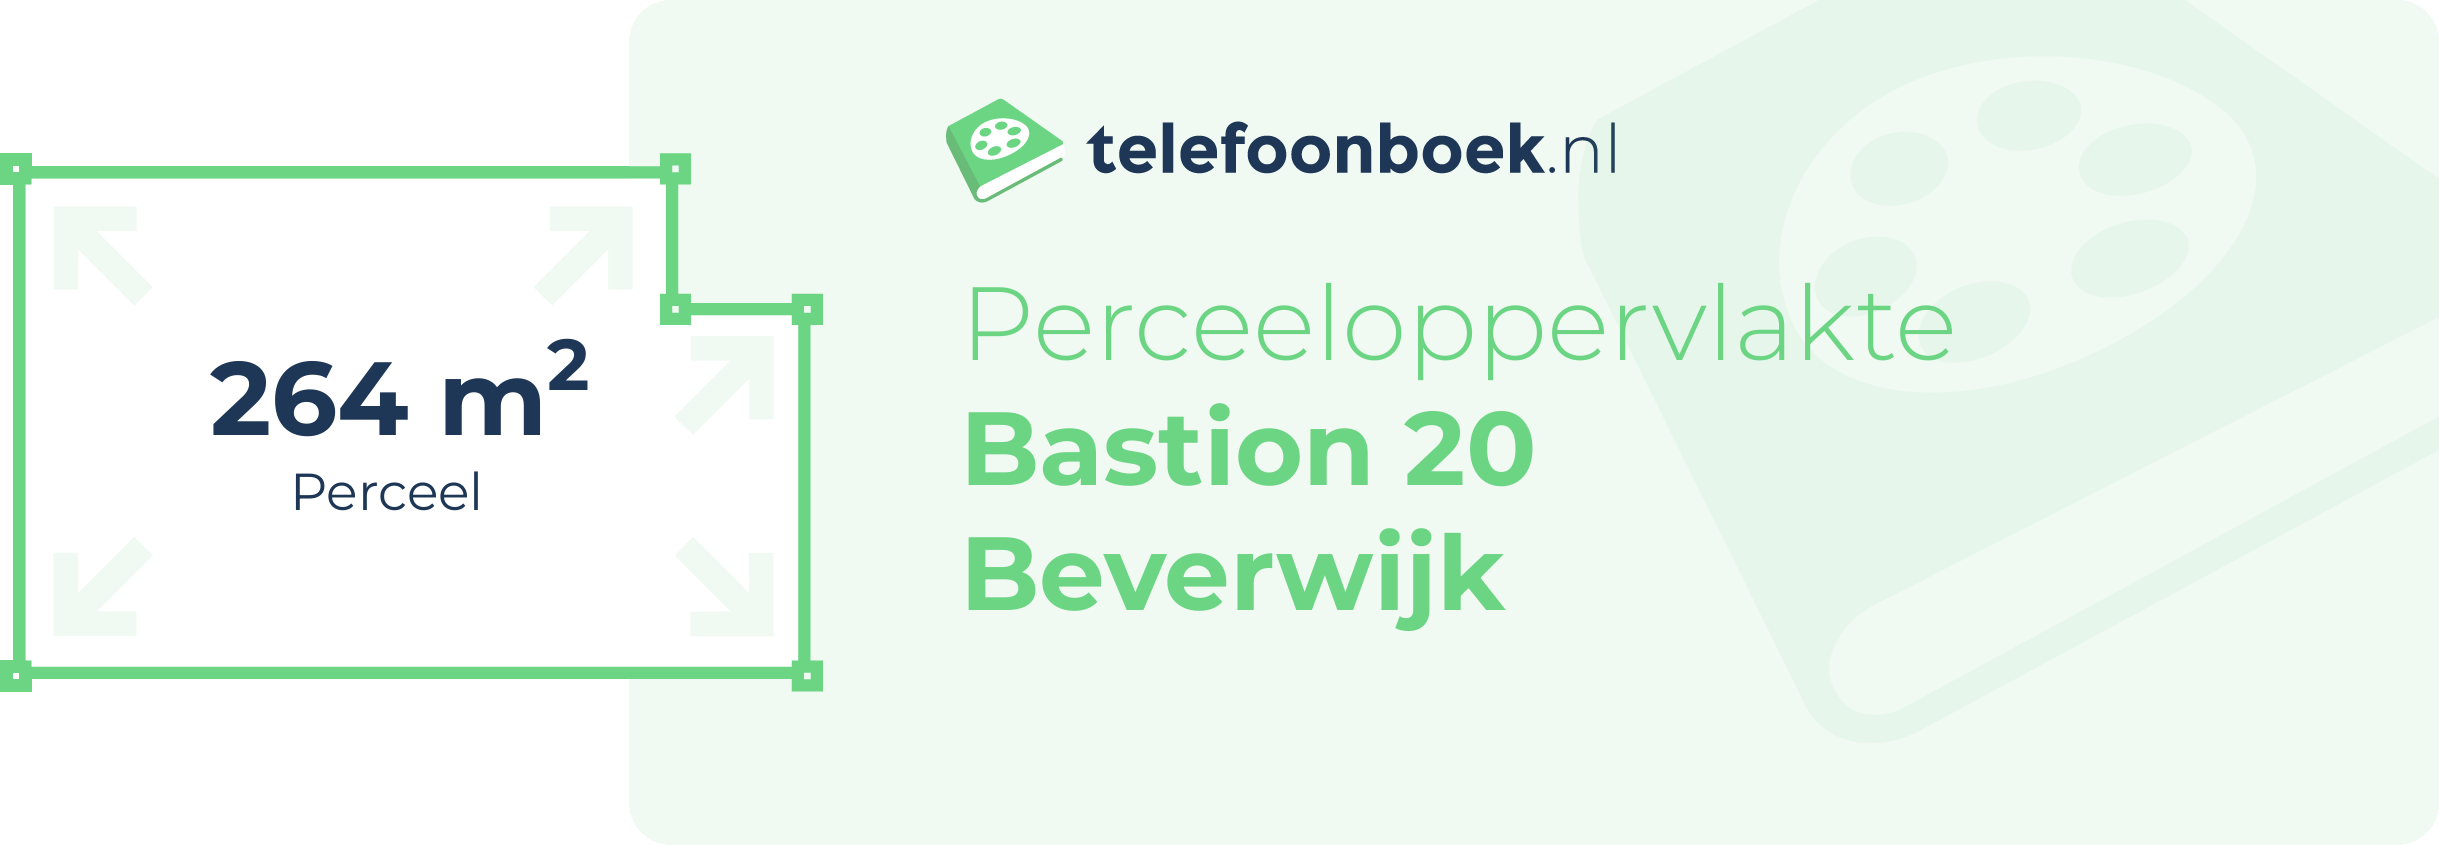 Perceeloppervlakte Bastion 20 Beverwijk